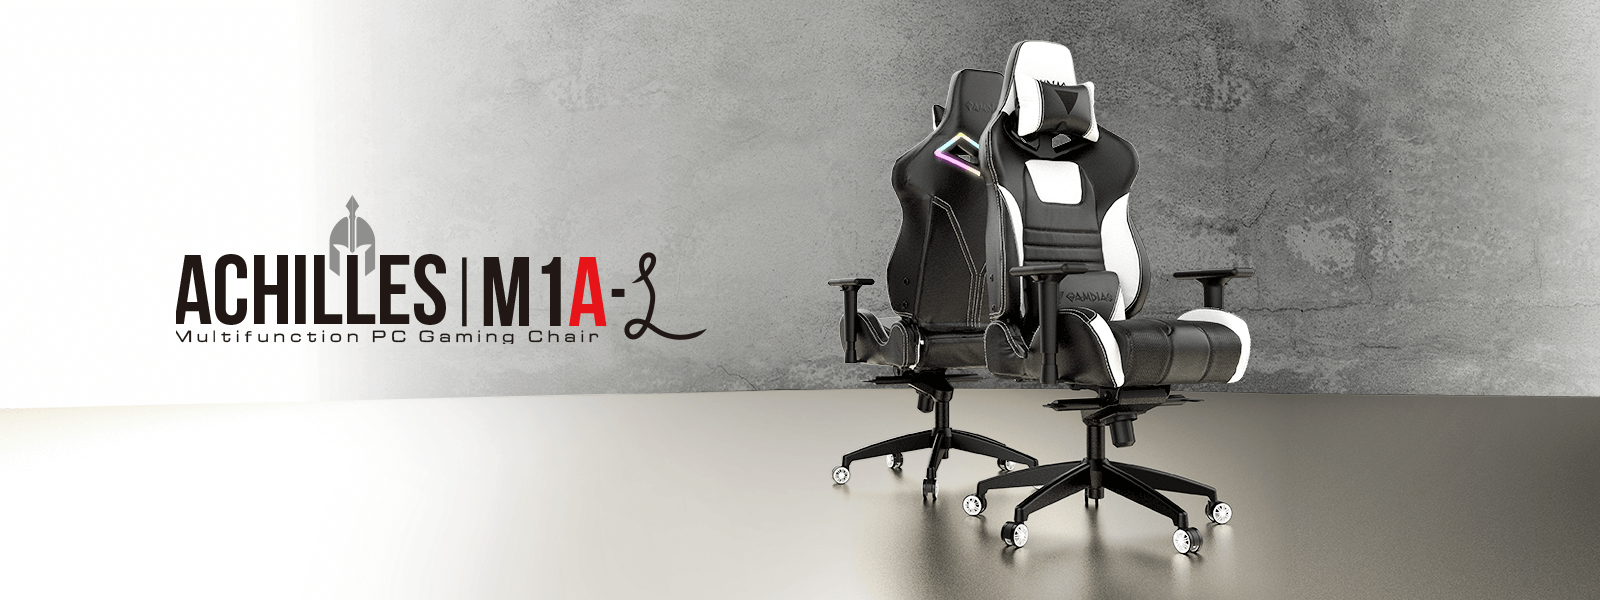 Gamdias-ACHILLES-M1A-L-Multi-function-Gaming-Chair